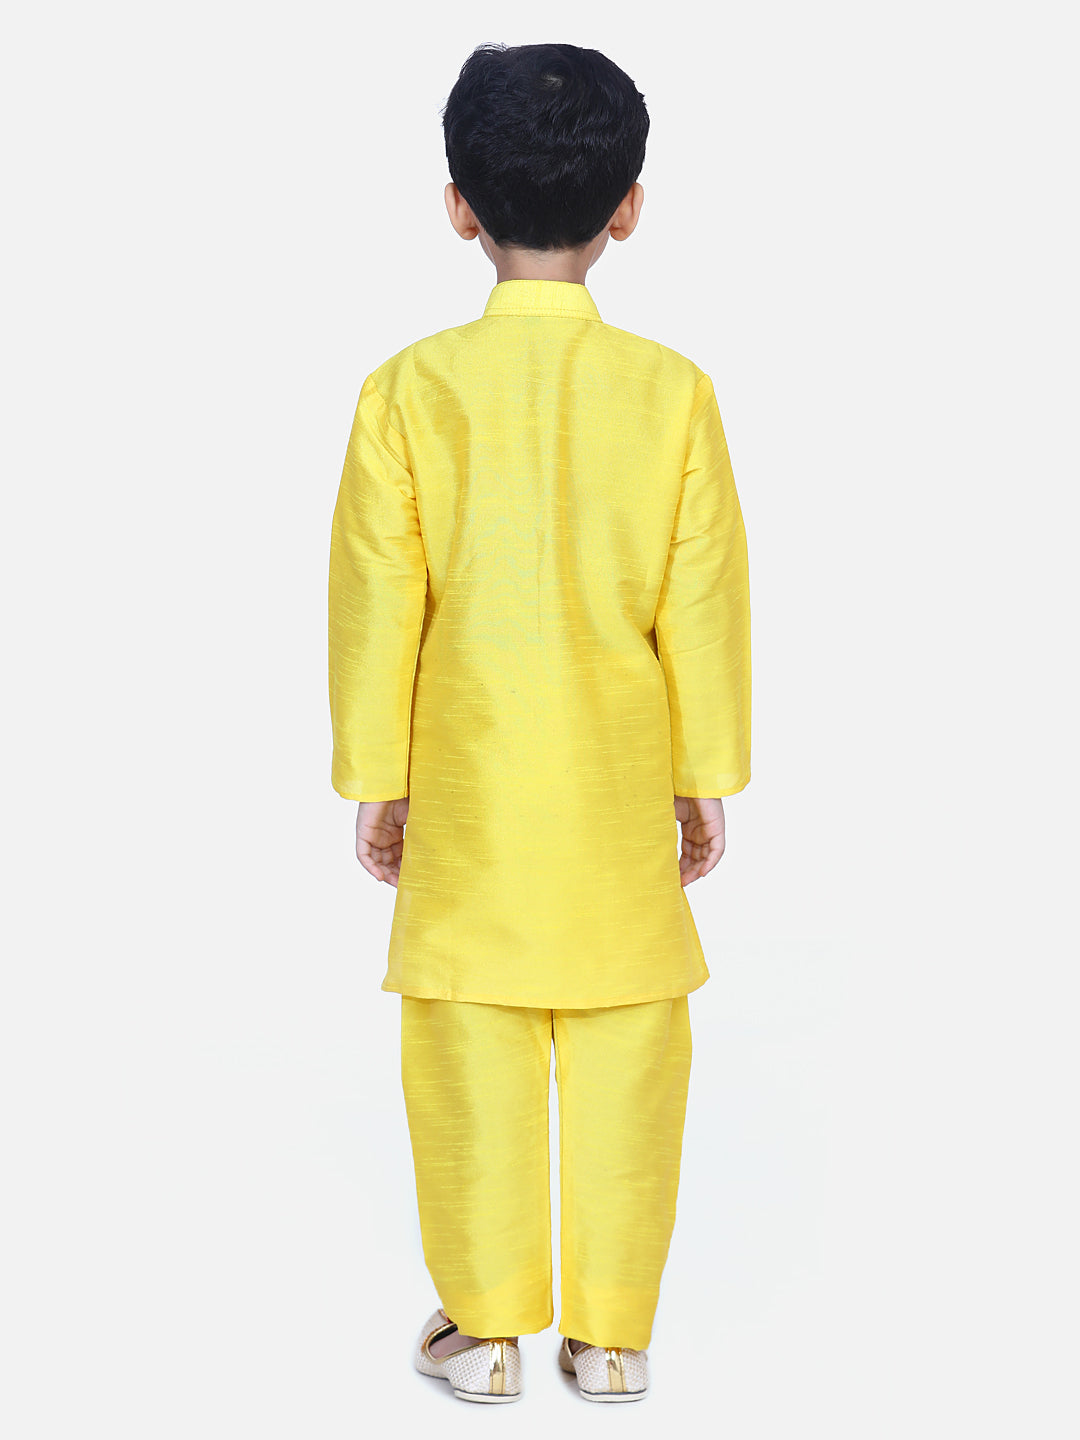 BownBee Full Sleeves Flower Design Attached Jacket Kurta With Pyjama - Yellow